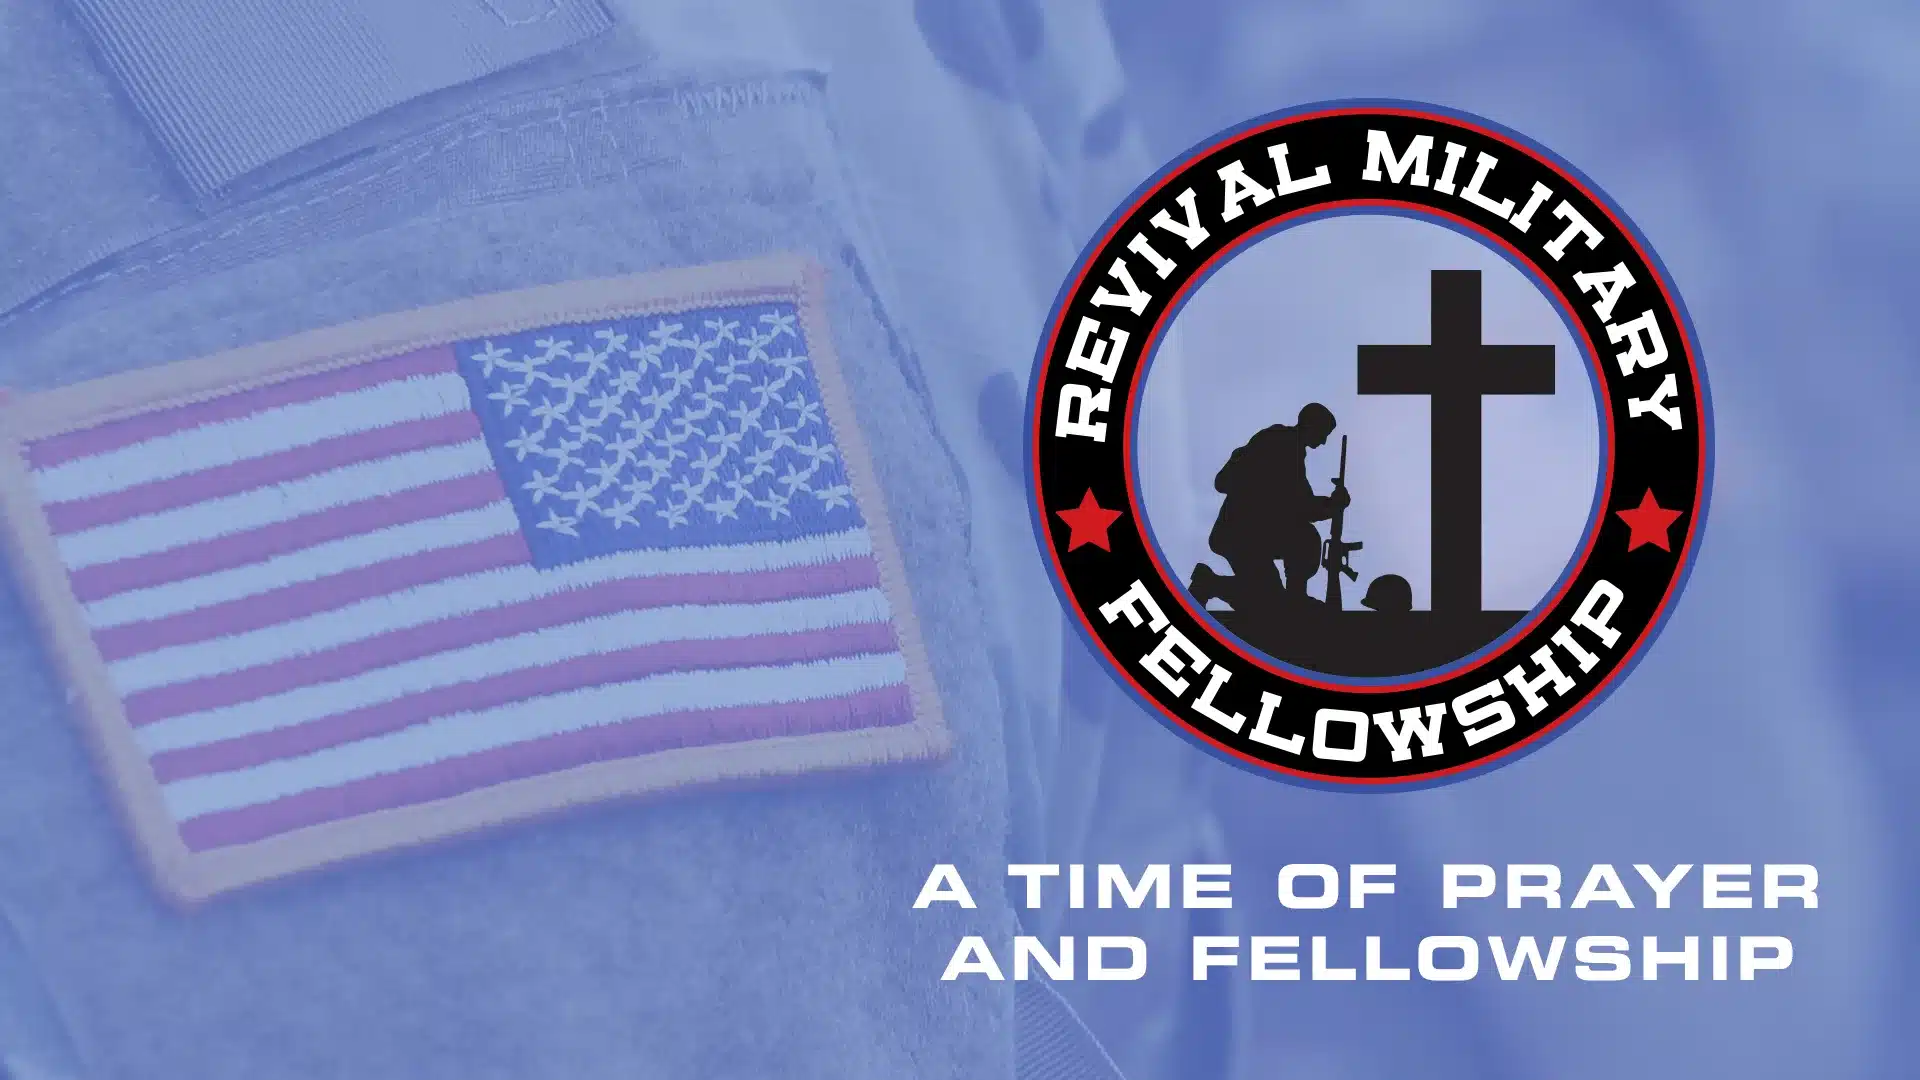 Military Fellowship & Prayer